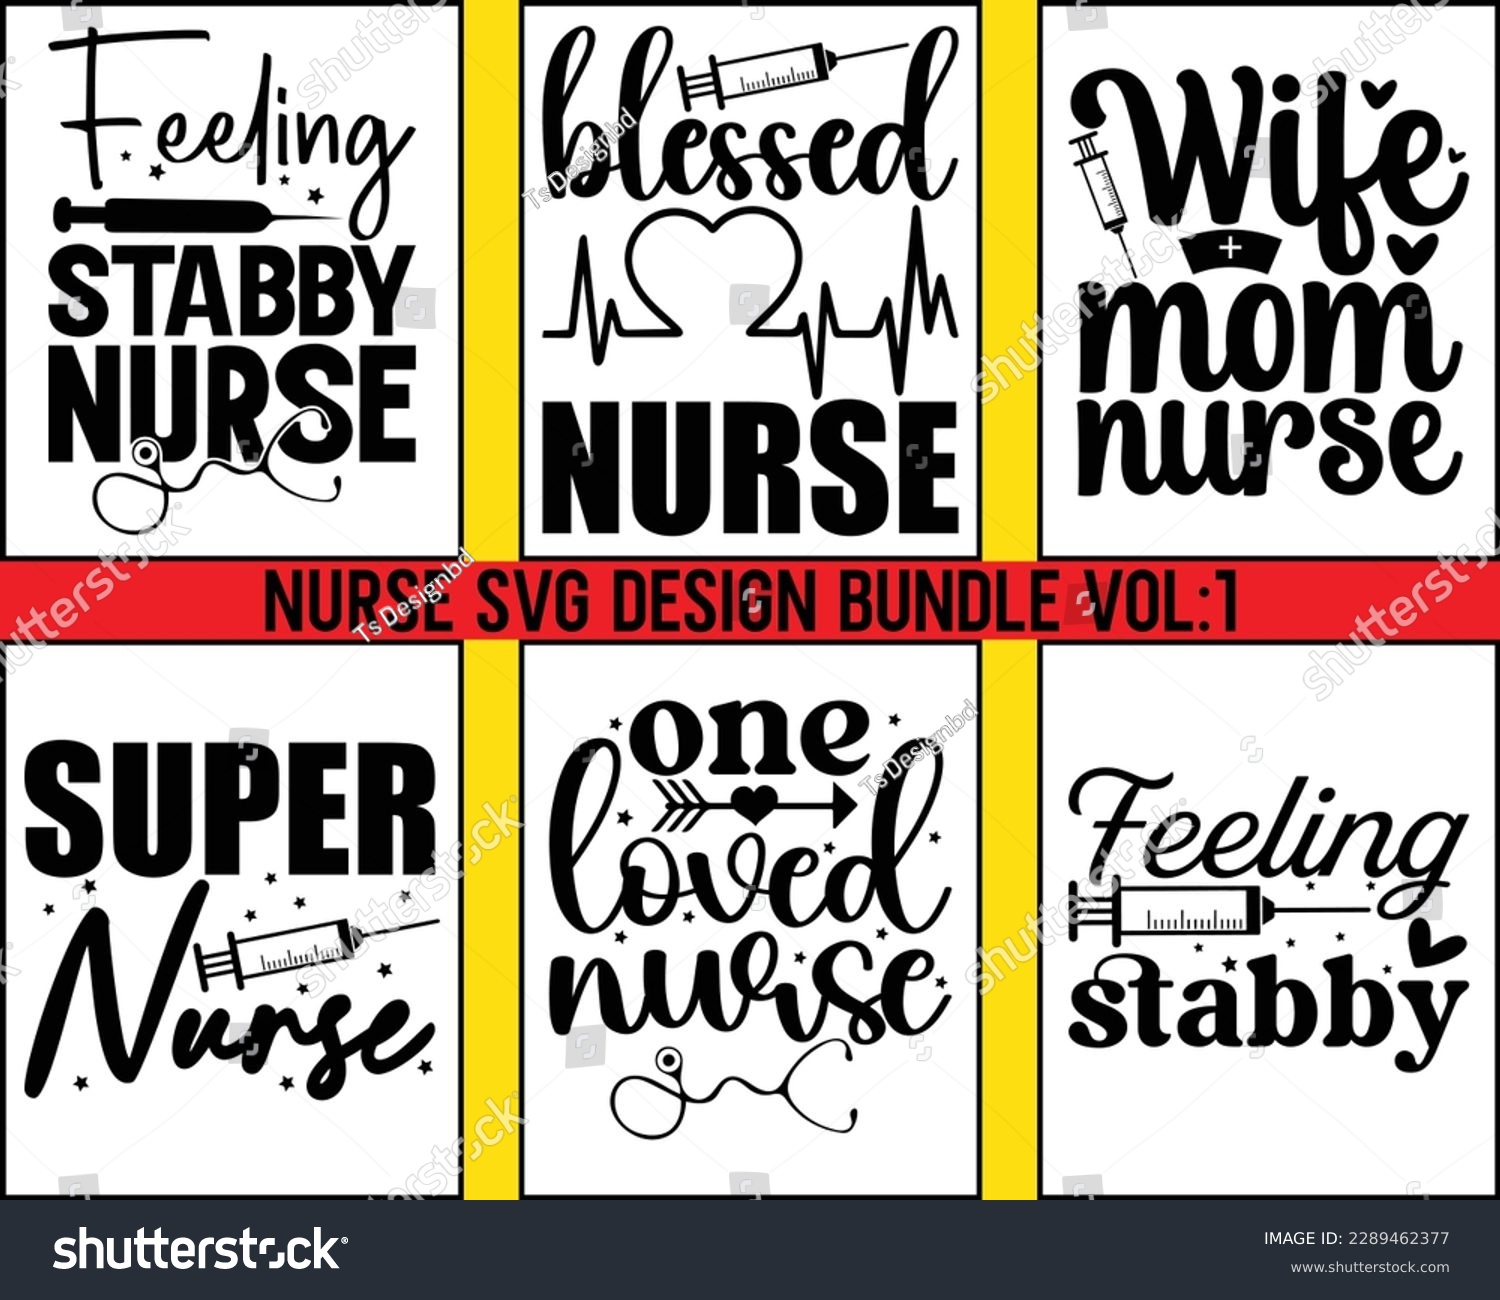 SVG of Nurse Design SVG Bundle  Vol 1, nurse svg bundle, nurse T shirt design, nurse cut file,nurse svg,Nurse Quotes SVG, Doctor Svg,Cut Files for Cutting Machines like Cricut and Silhouette, svg